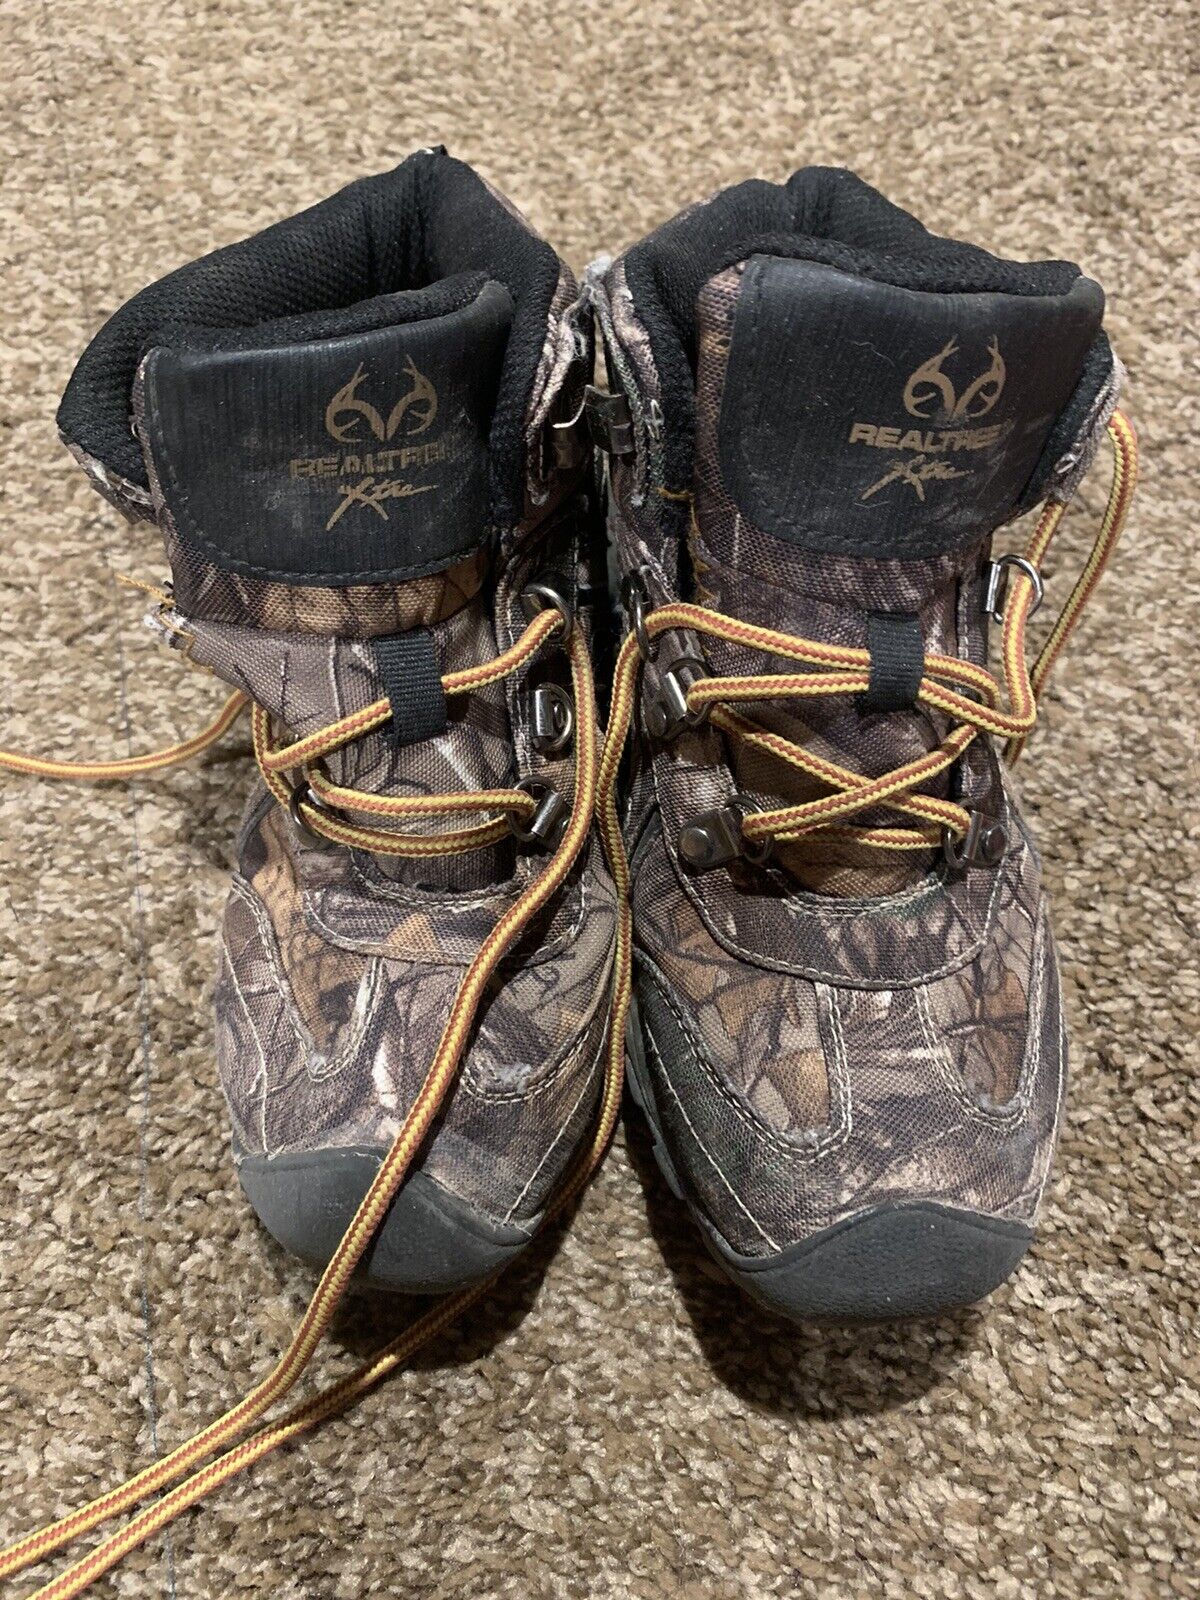 Realtree Xtra Boys Girls Youth Size 3 Camo Boots Hunting Hiking Canvas  605388301055 | eBay